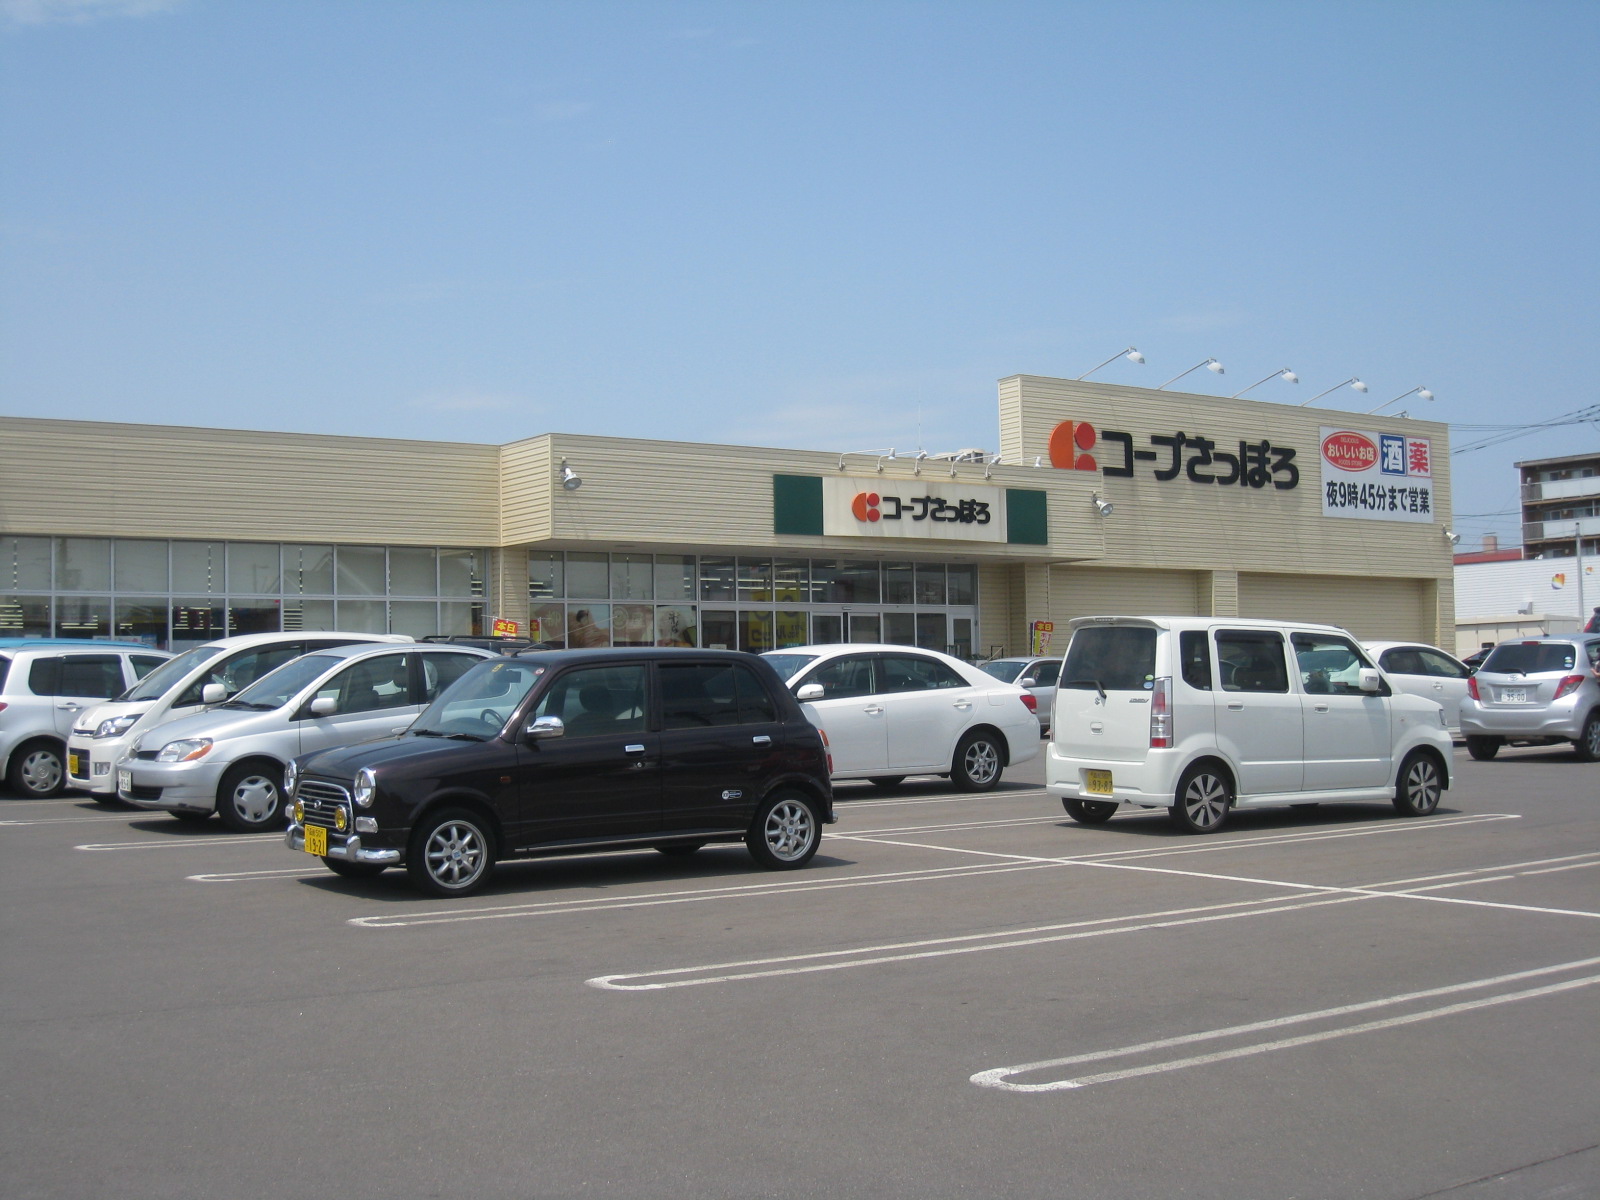 Shopping centre. 390m until Hitomi shopping center (shopping center)